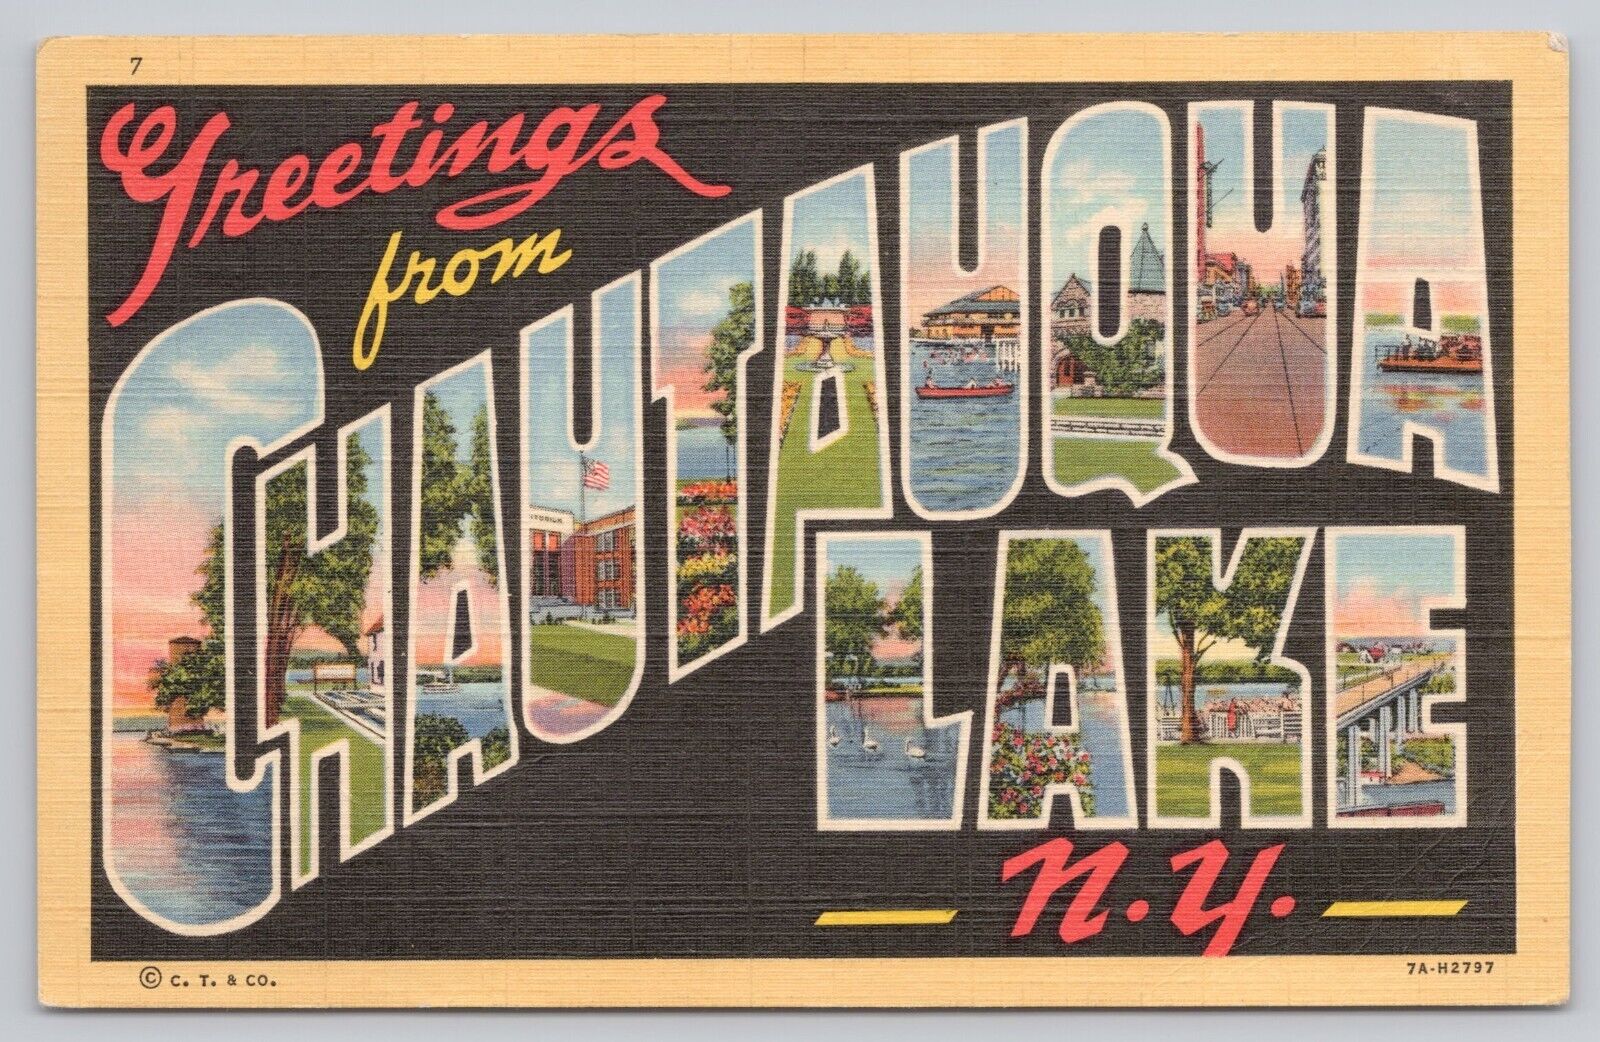 Chautauqua Lake New York, Large Letter Greetings, Vintage Postcard